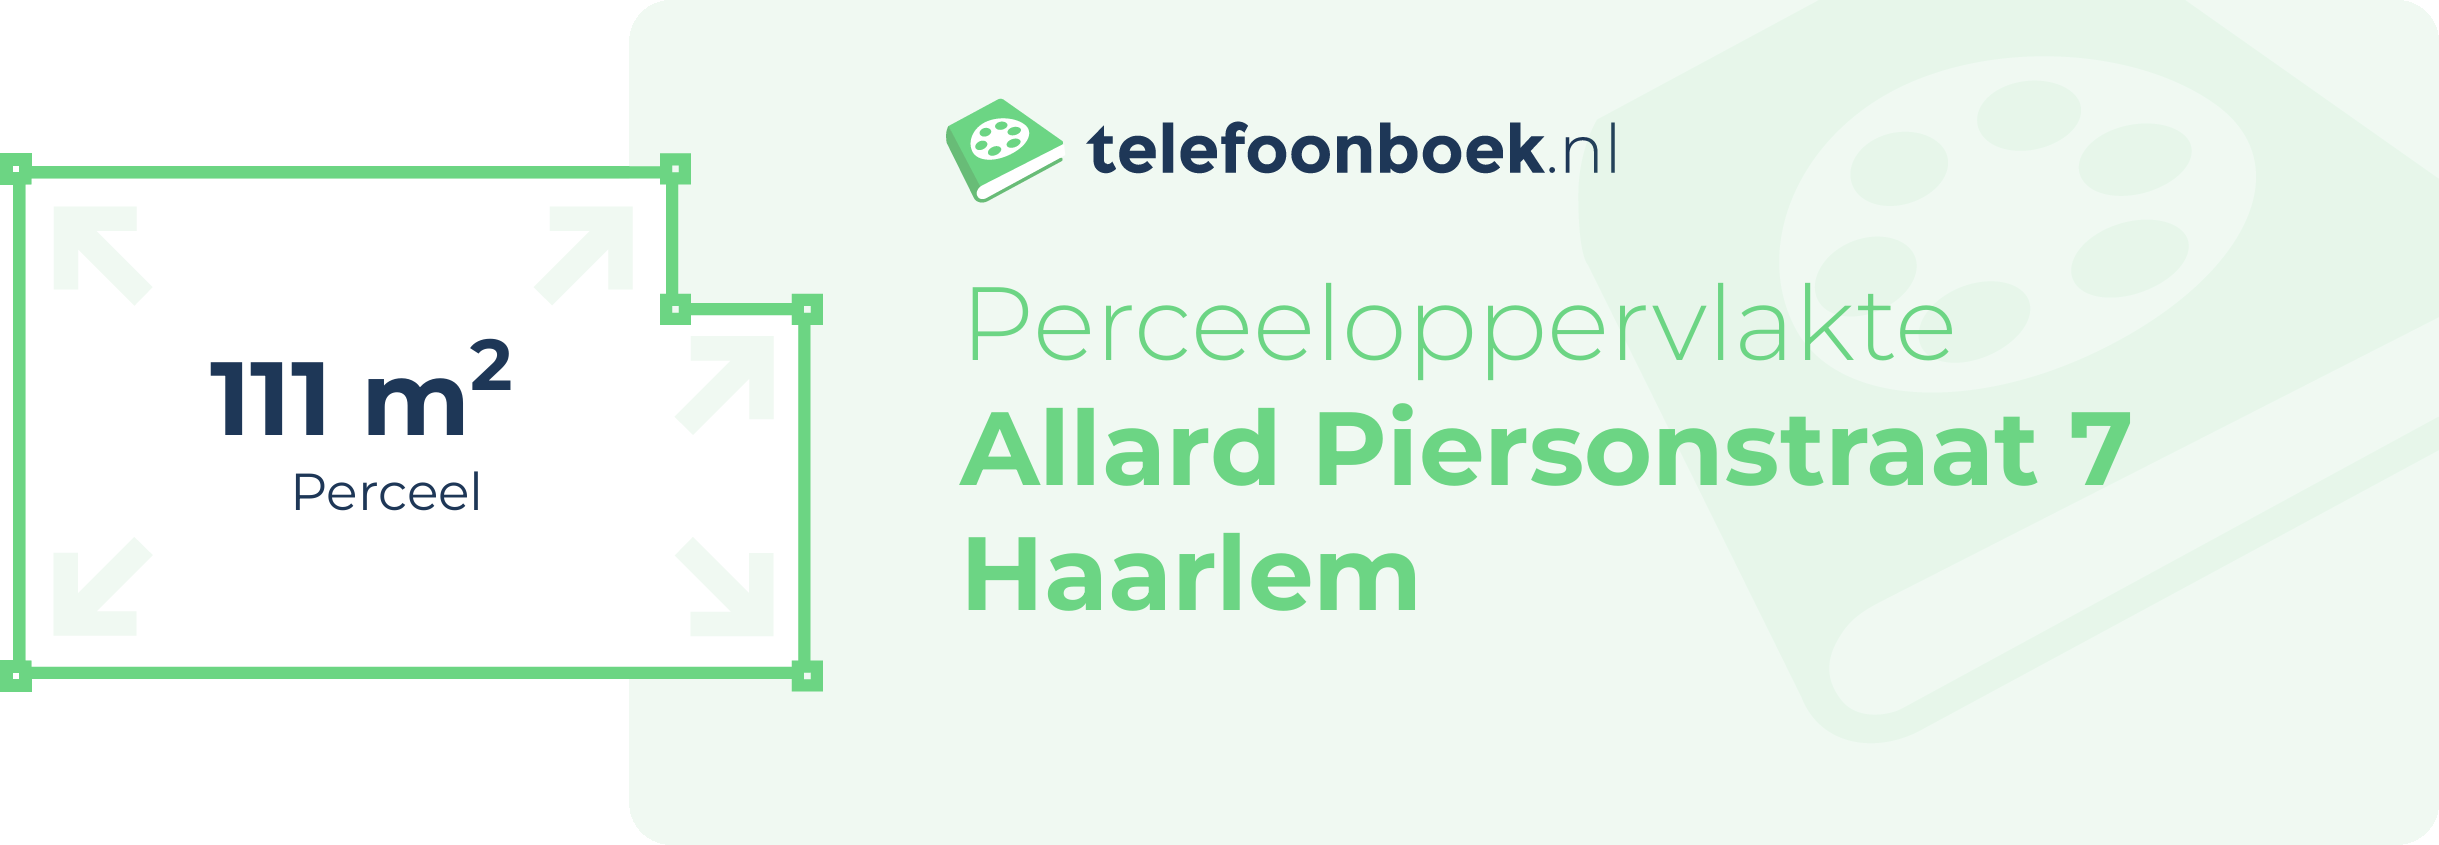 Perceeloppervlakte Allard Piersonstraat 7 Haarlem